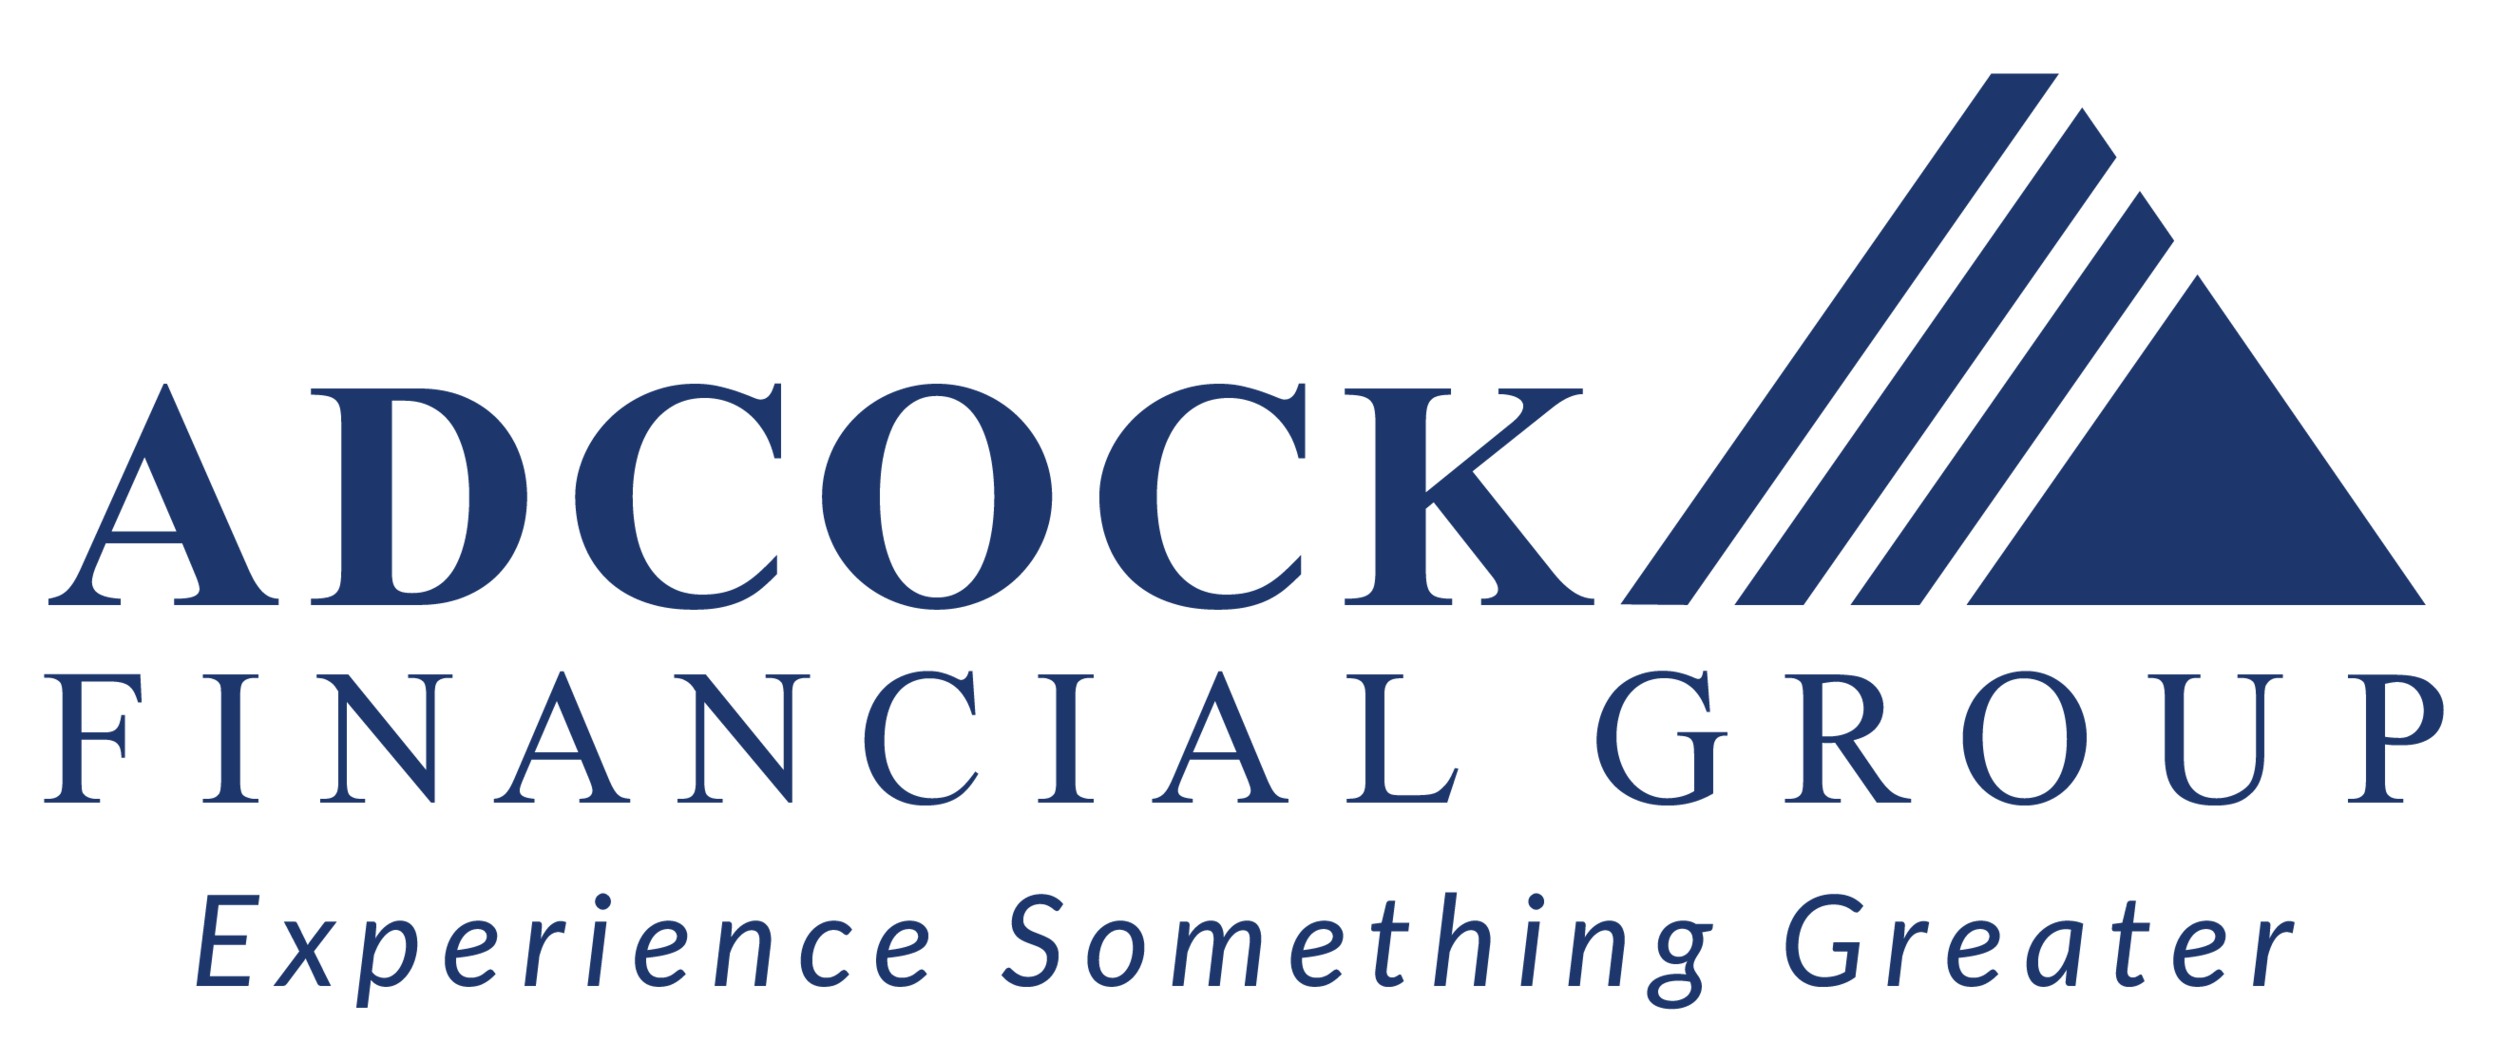 adcock logo.png